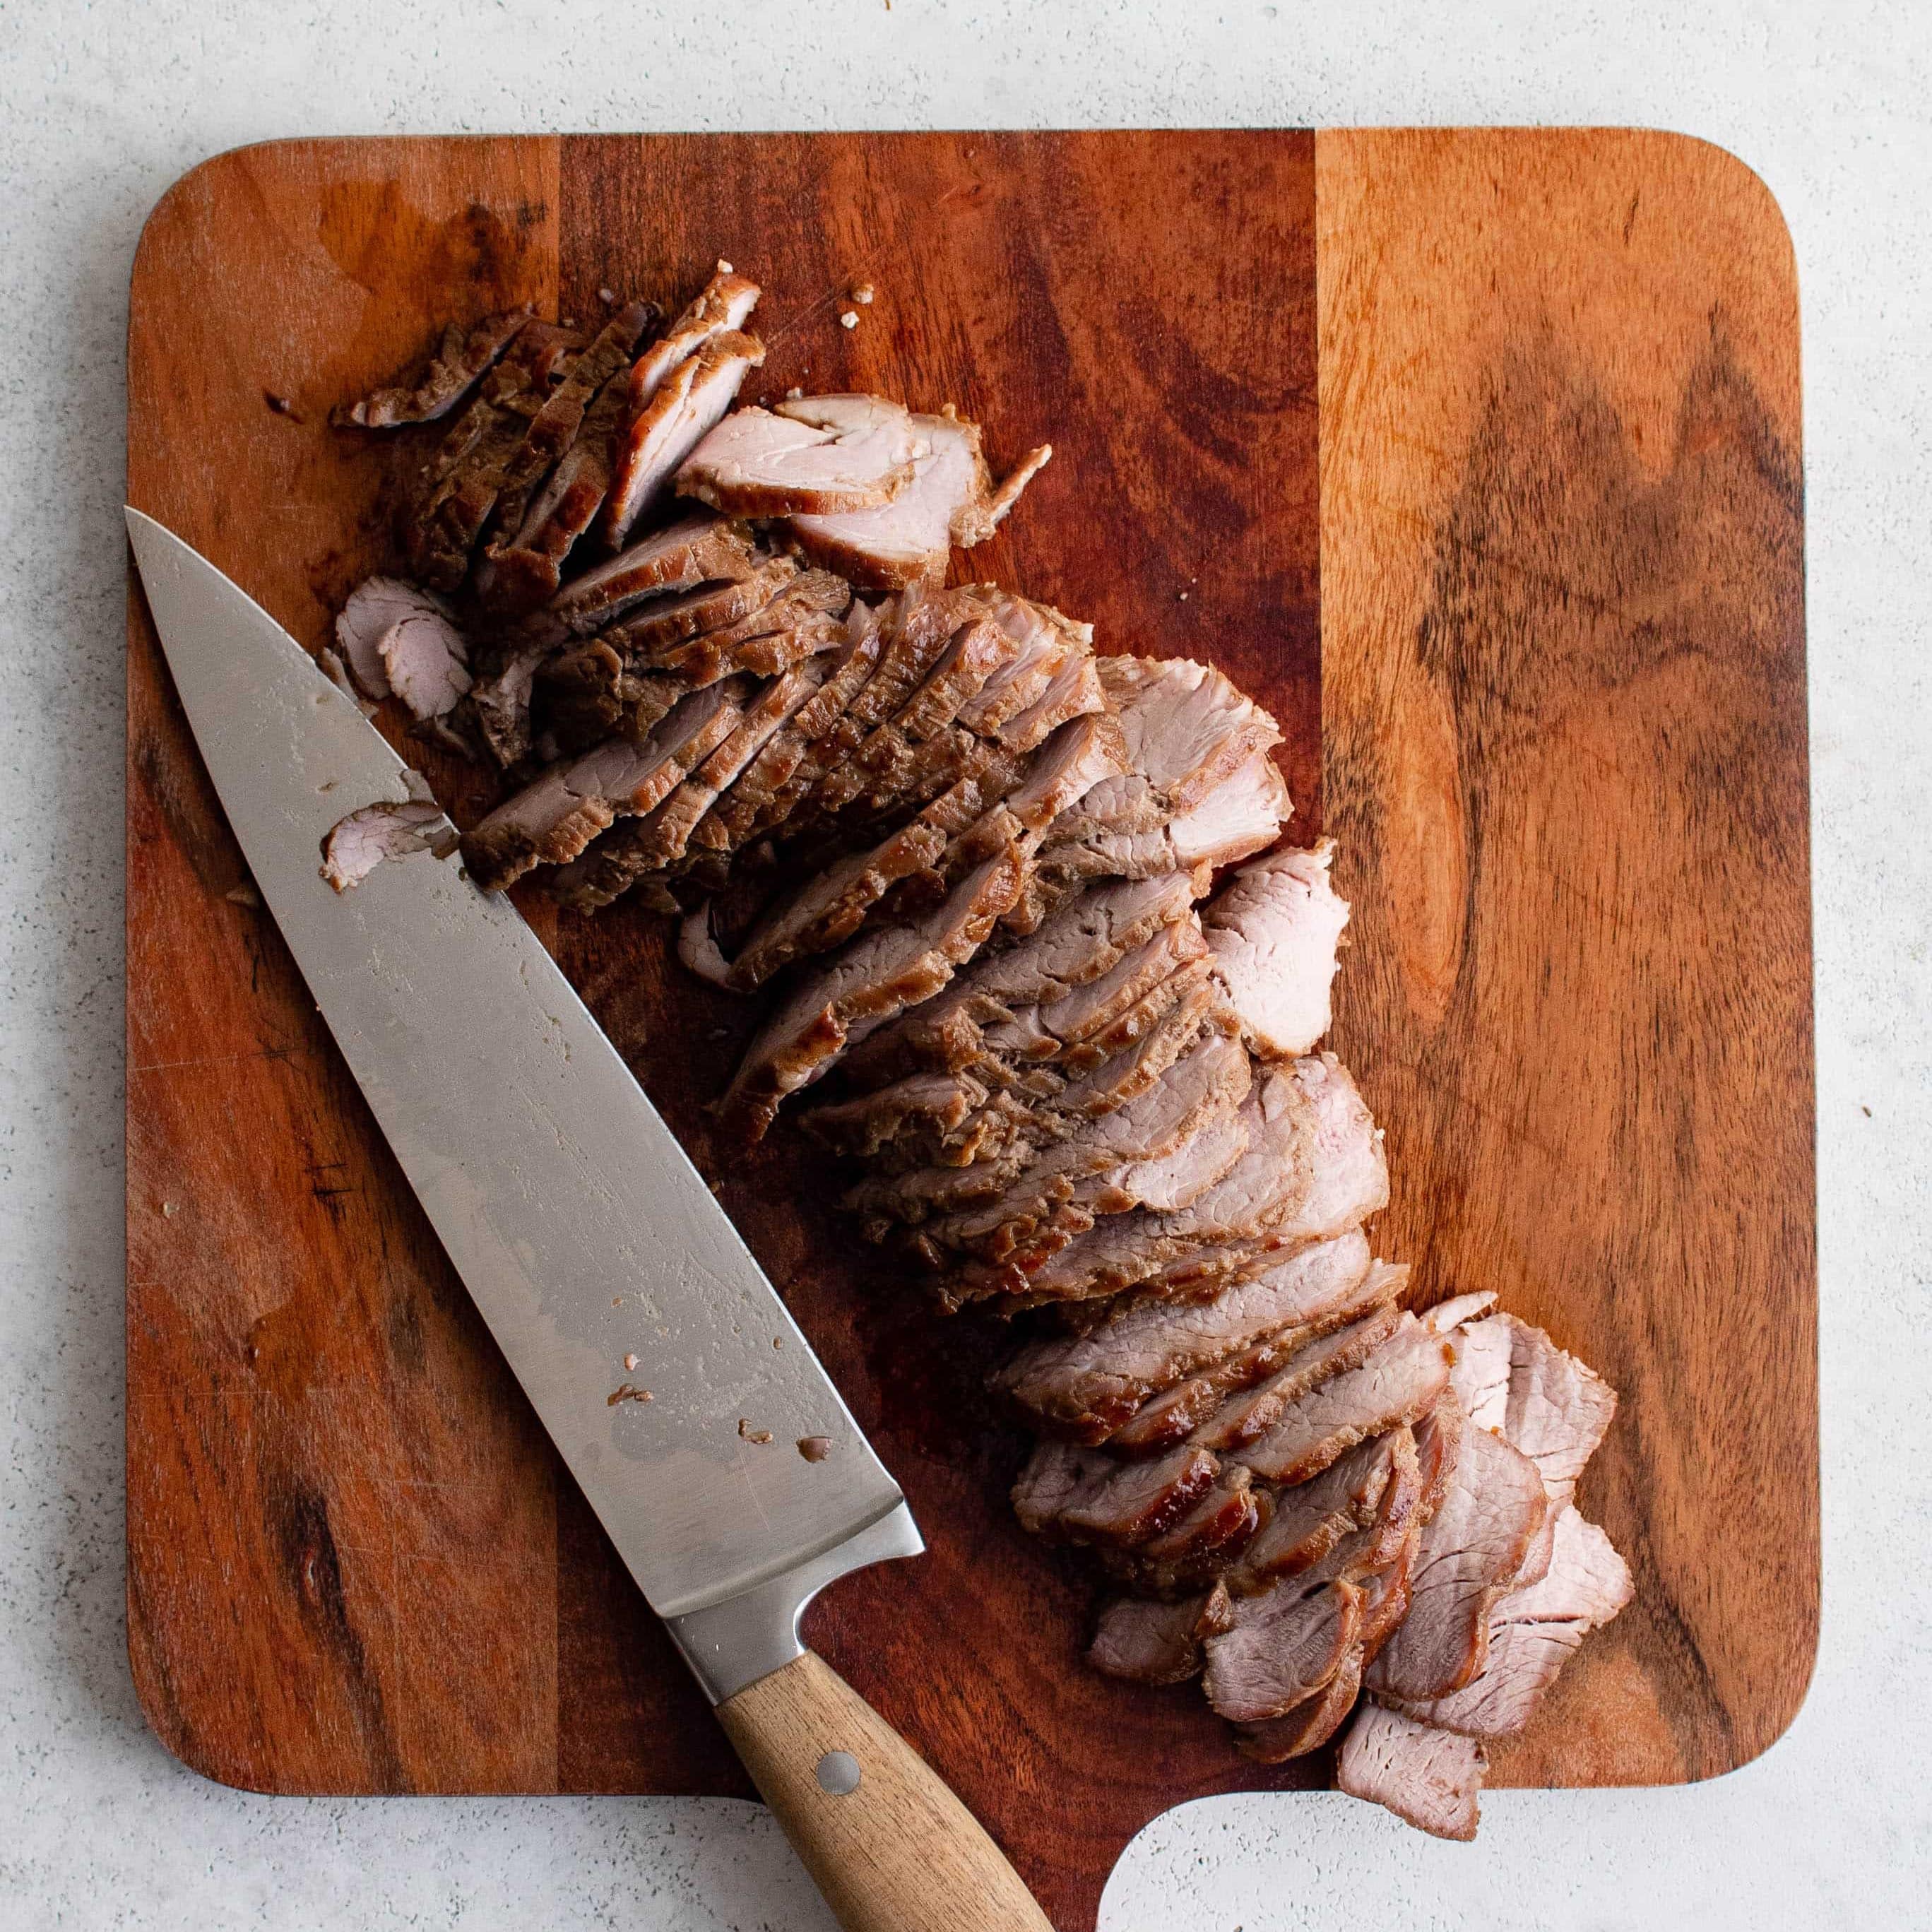 Thinly sliced pork tenderloin on a wood cutting board.